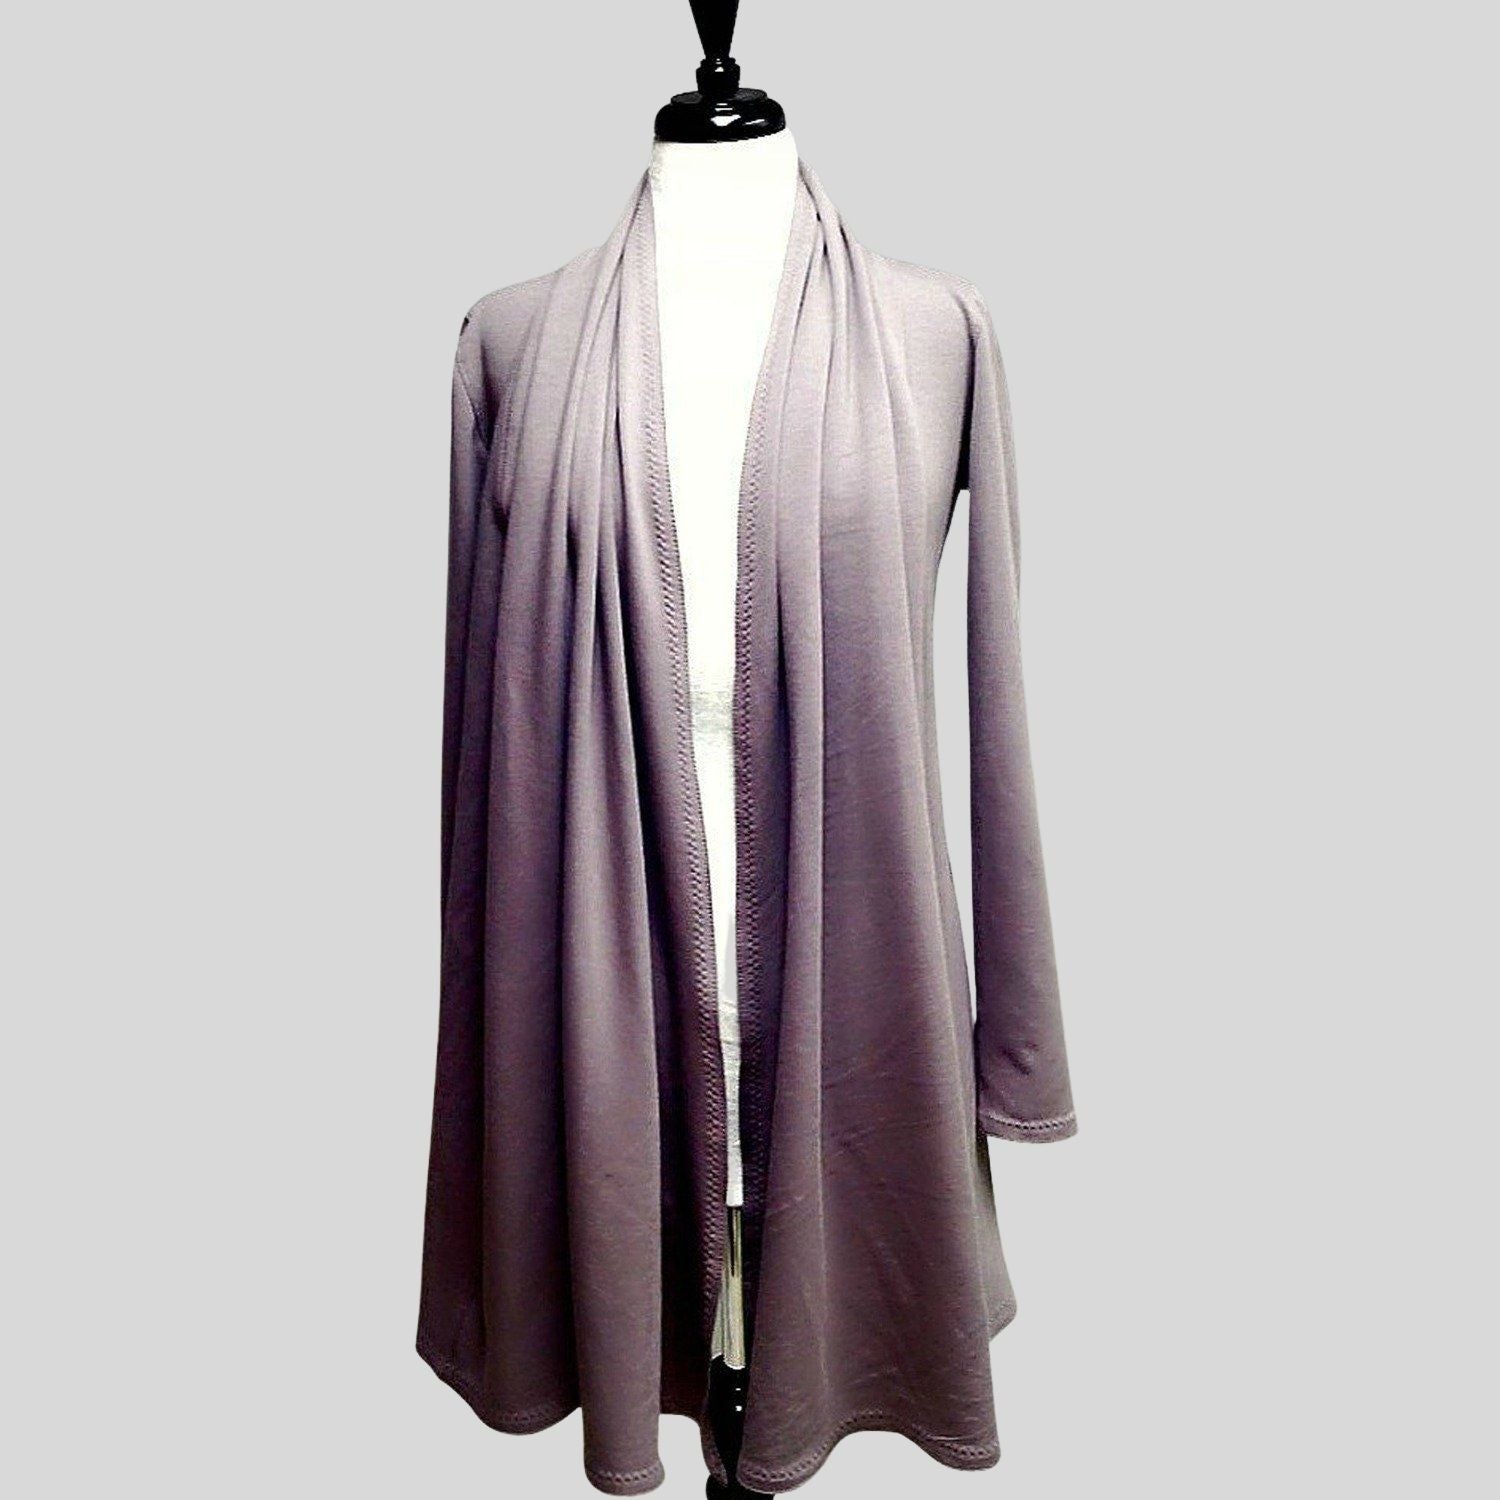 Buy long grey cardigan online Canada | Long cardigan with belt | Shop merino wool cardigans for women | Canada econica